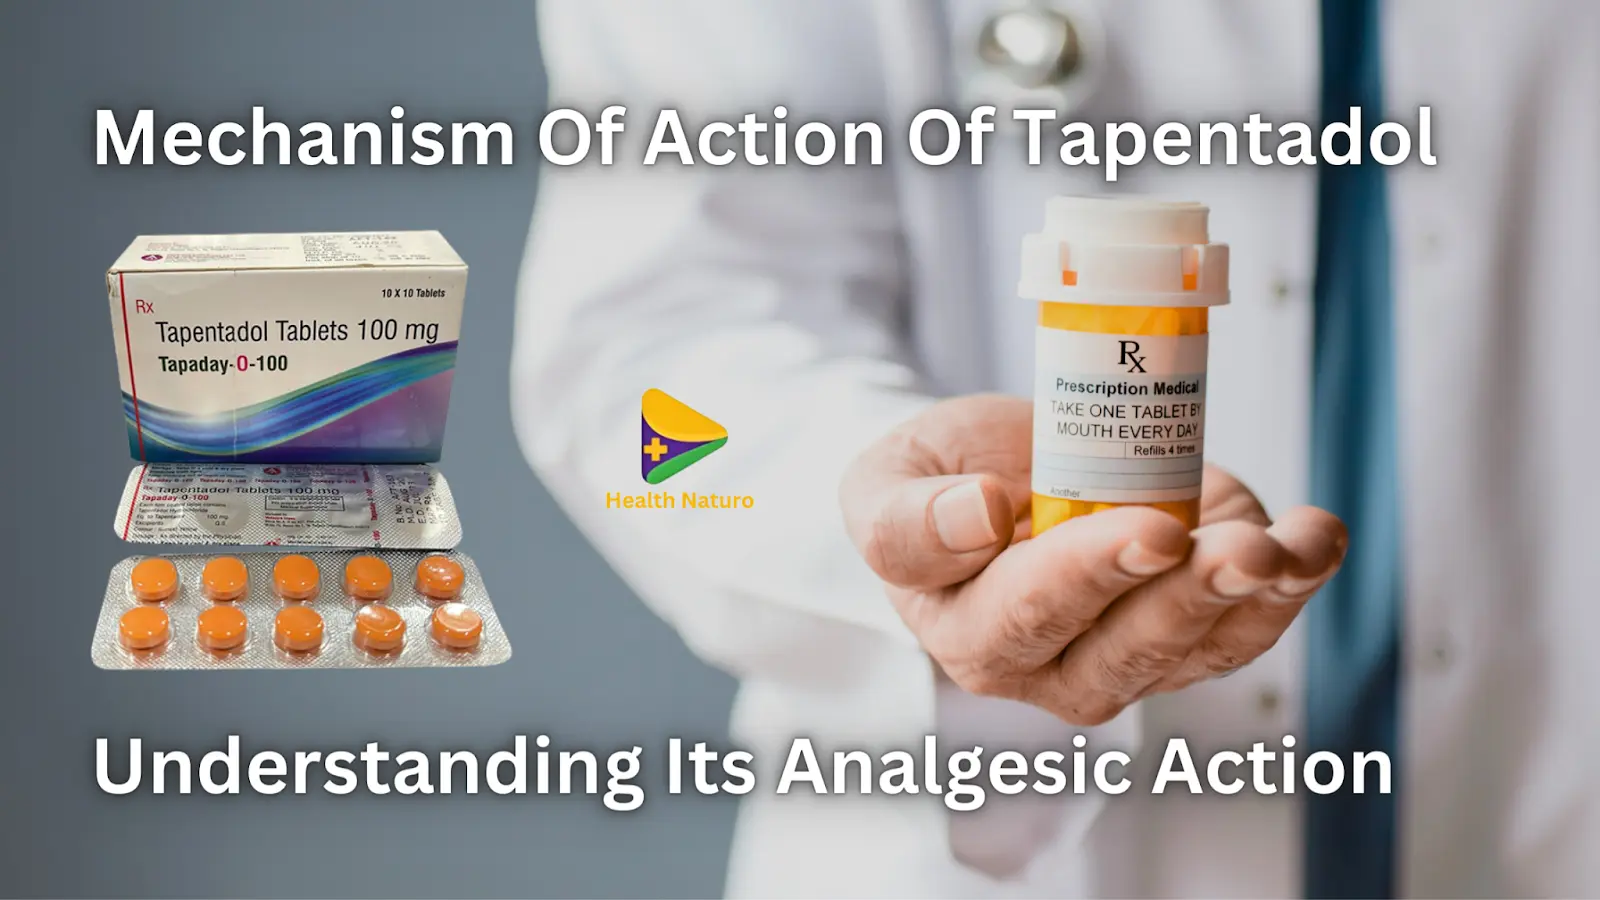 Aspadol: Uses And Dosage Information